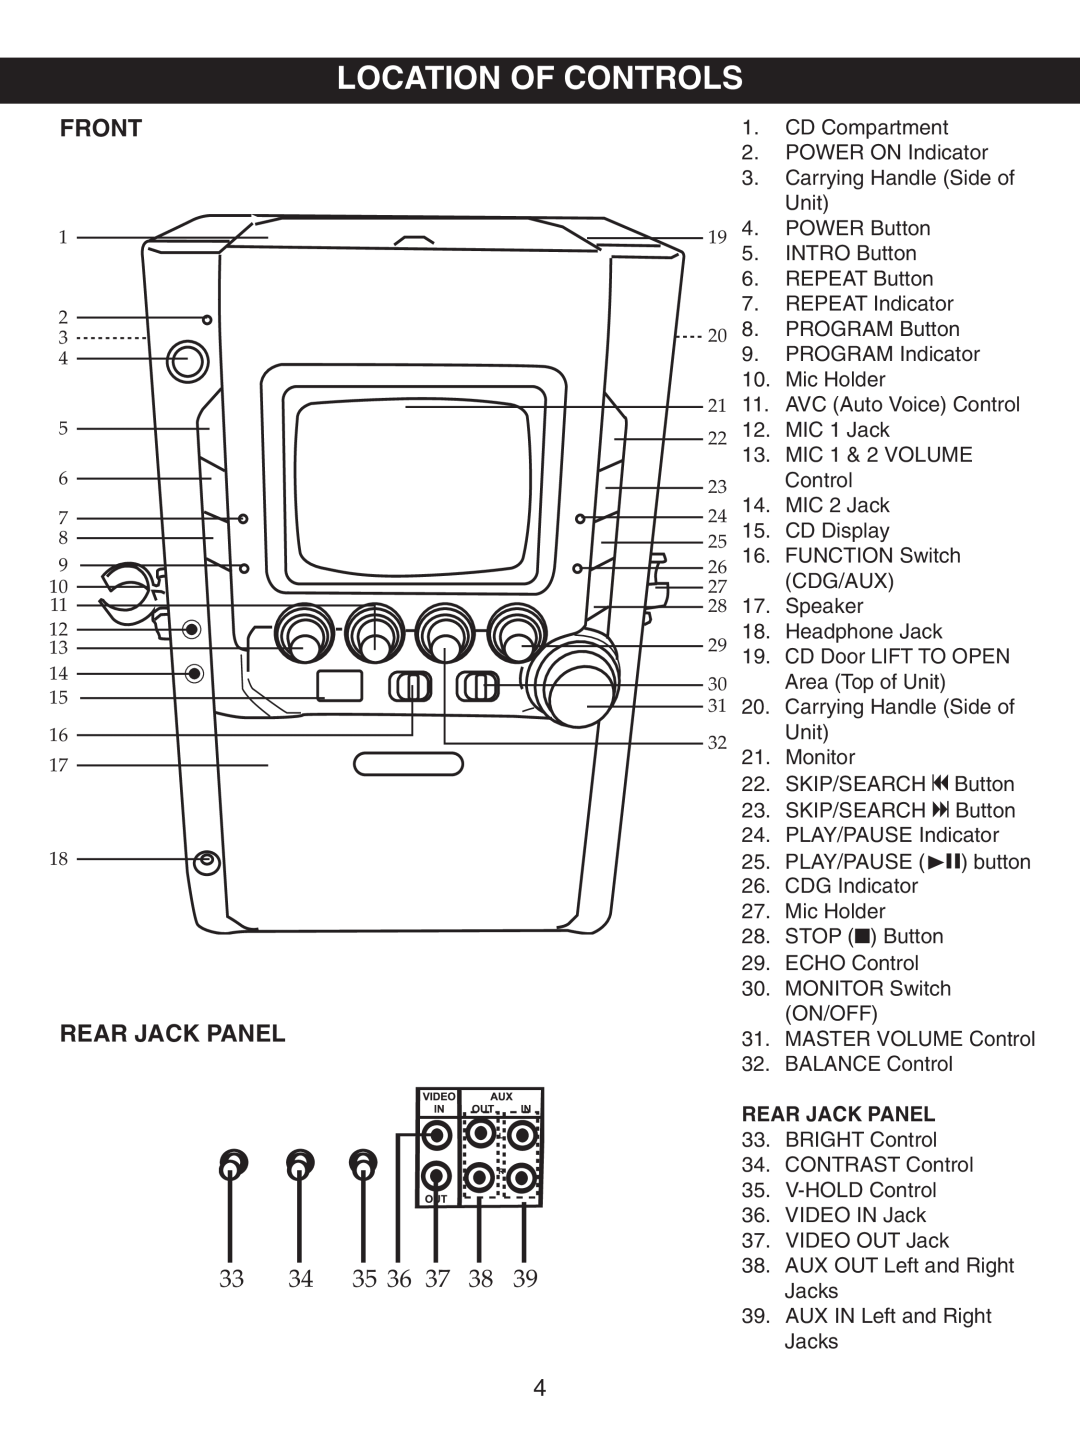 Memorex MKS5627 manual Location Of Controls, Front, Rear Jack Panel 